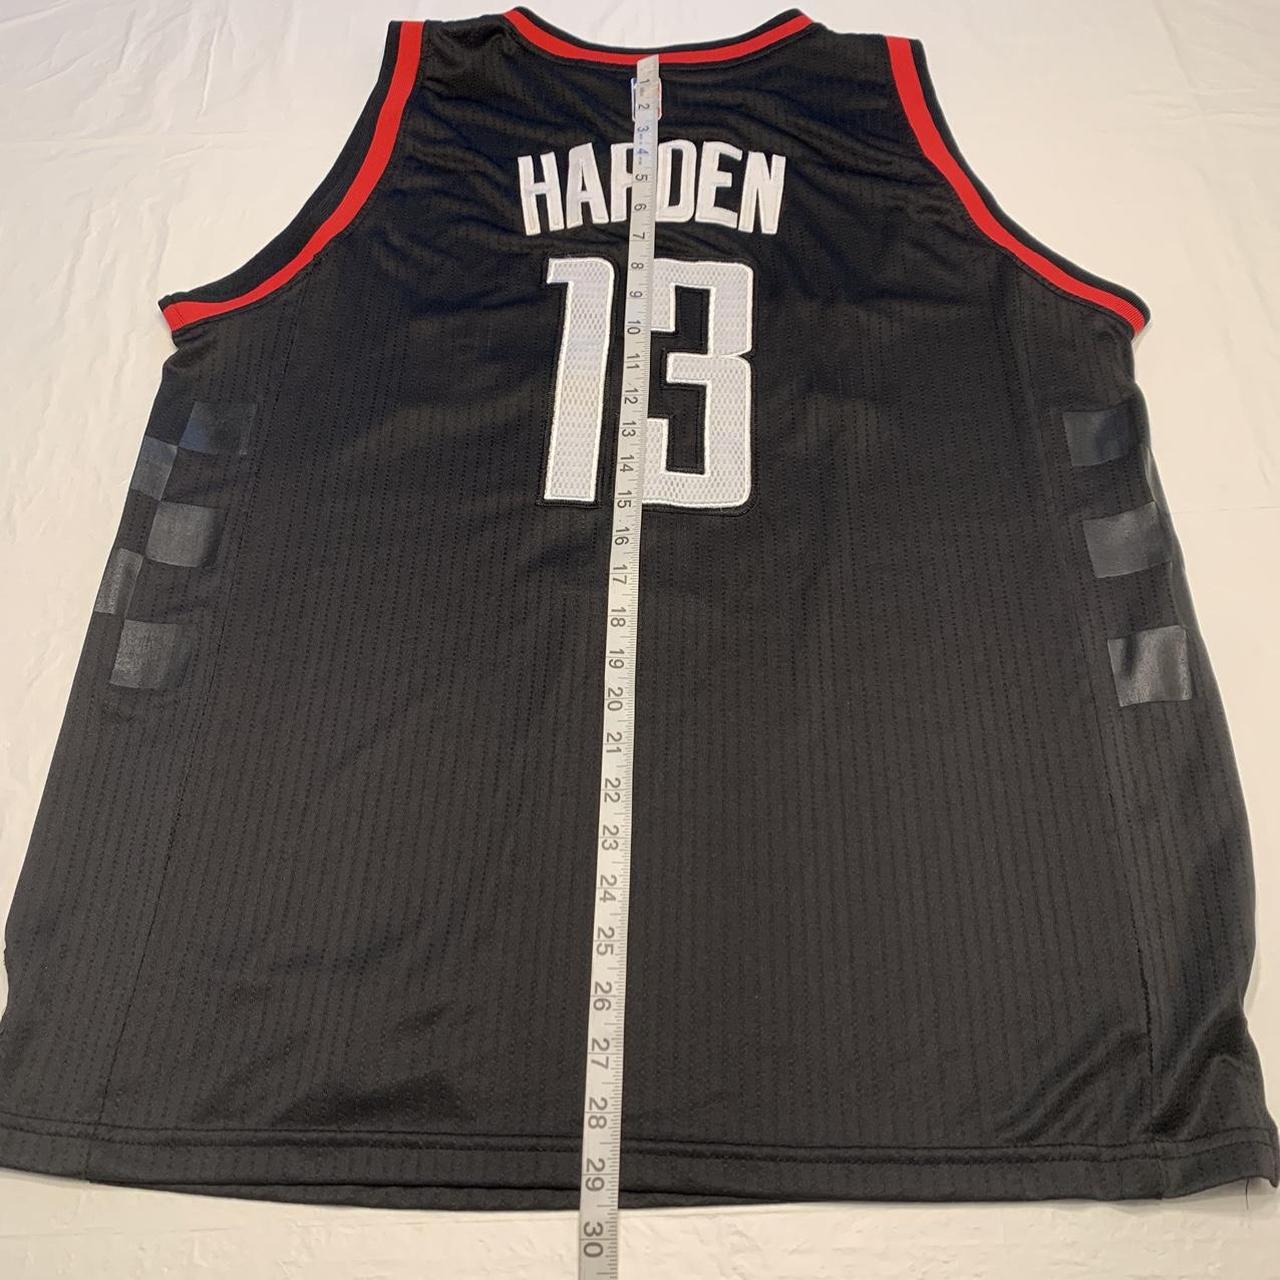 Adidas James Harden Houston Rockets Jersey Throwback NBA #13